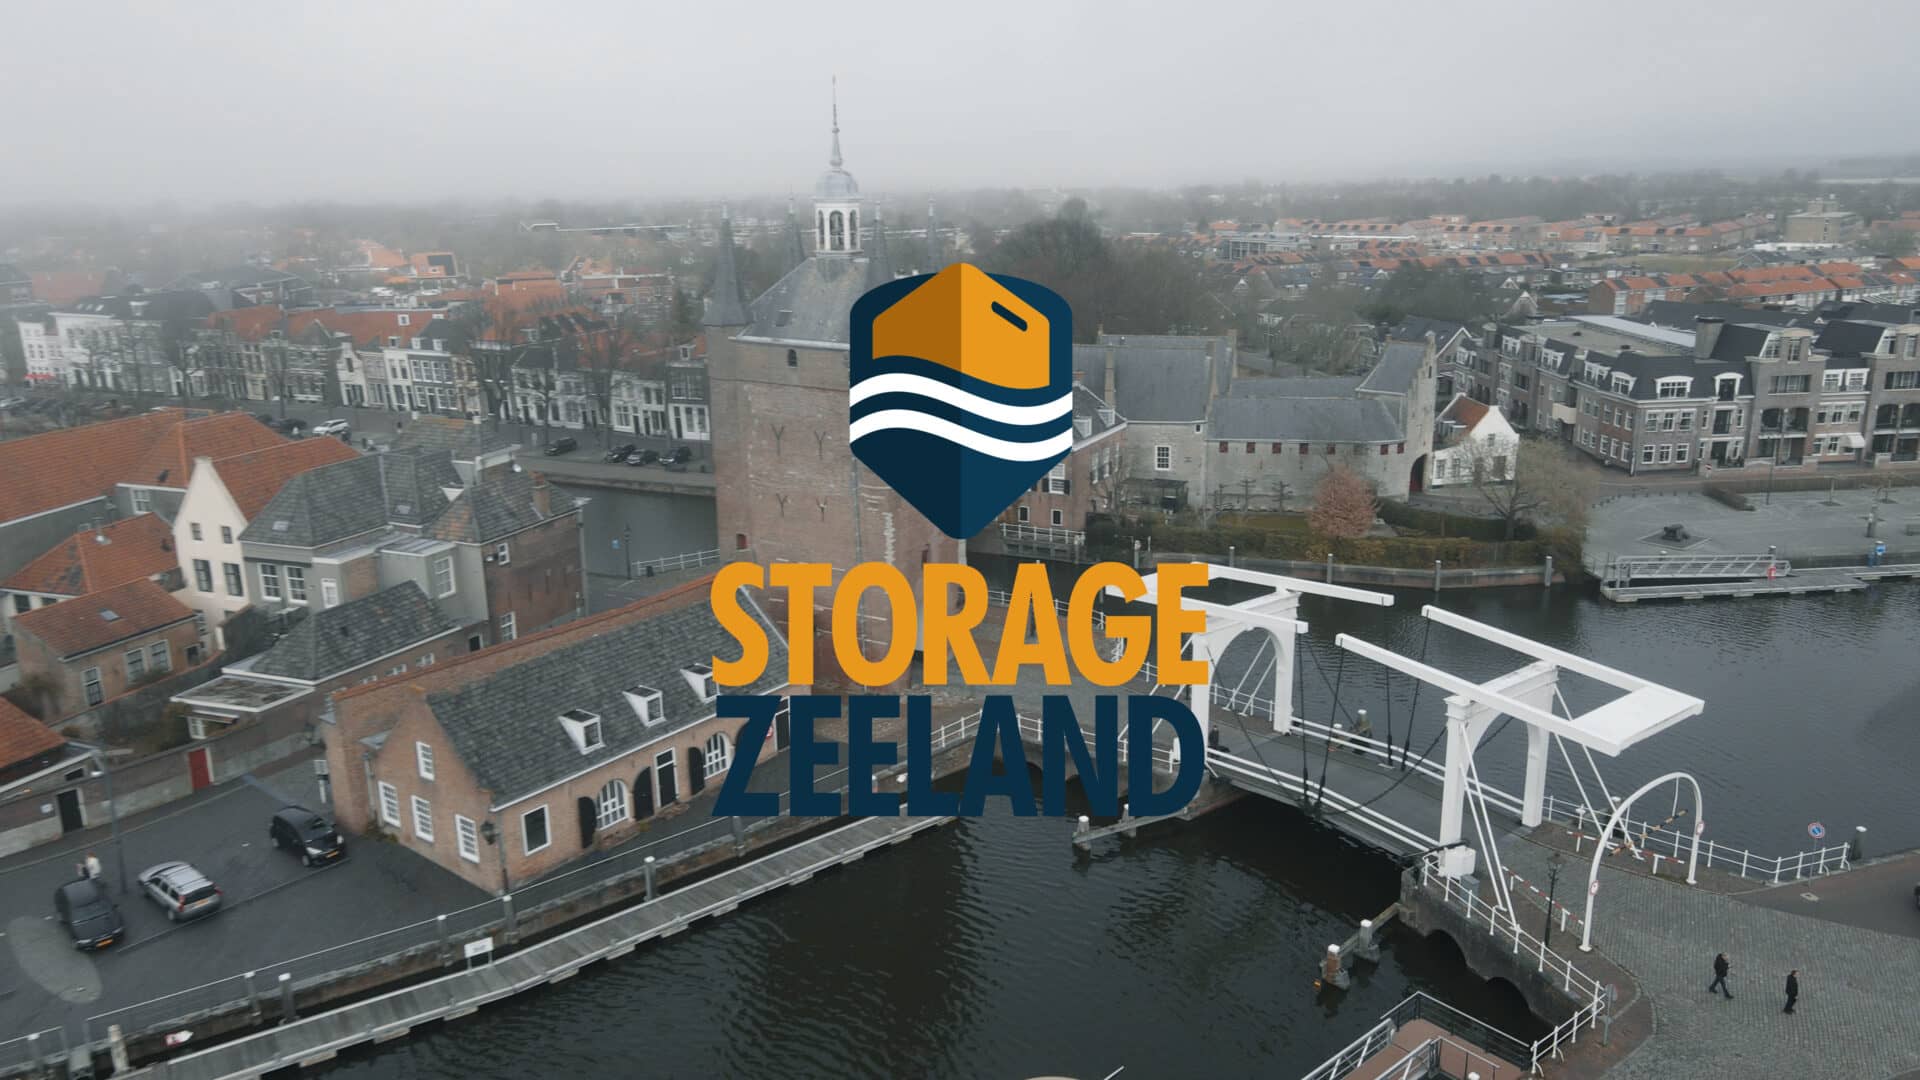 (c) Storagezeeland.nl